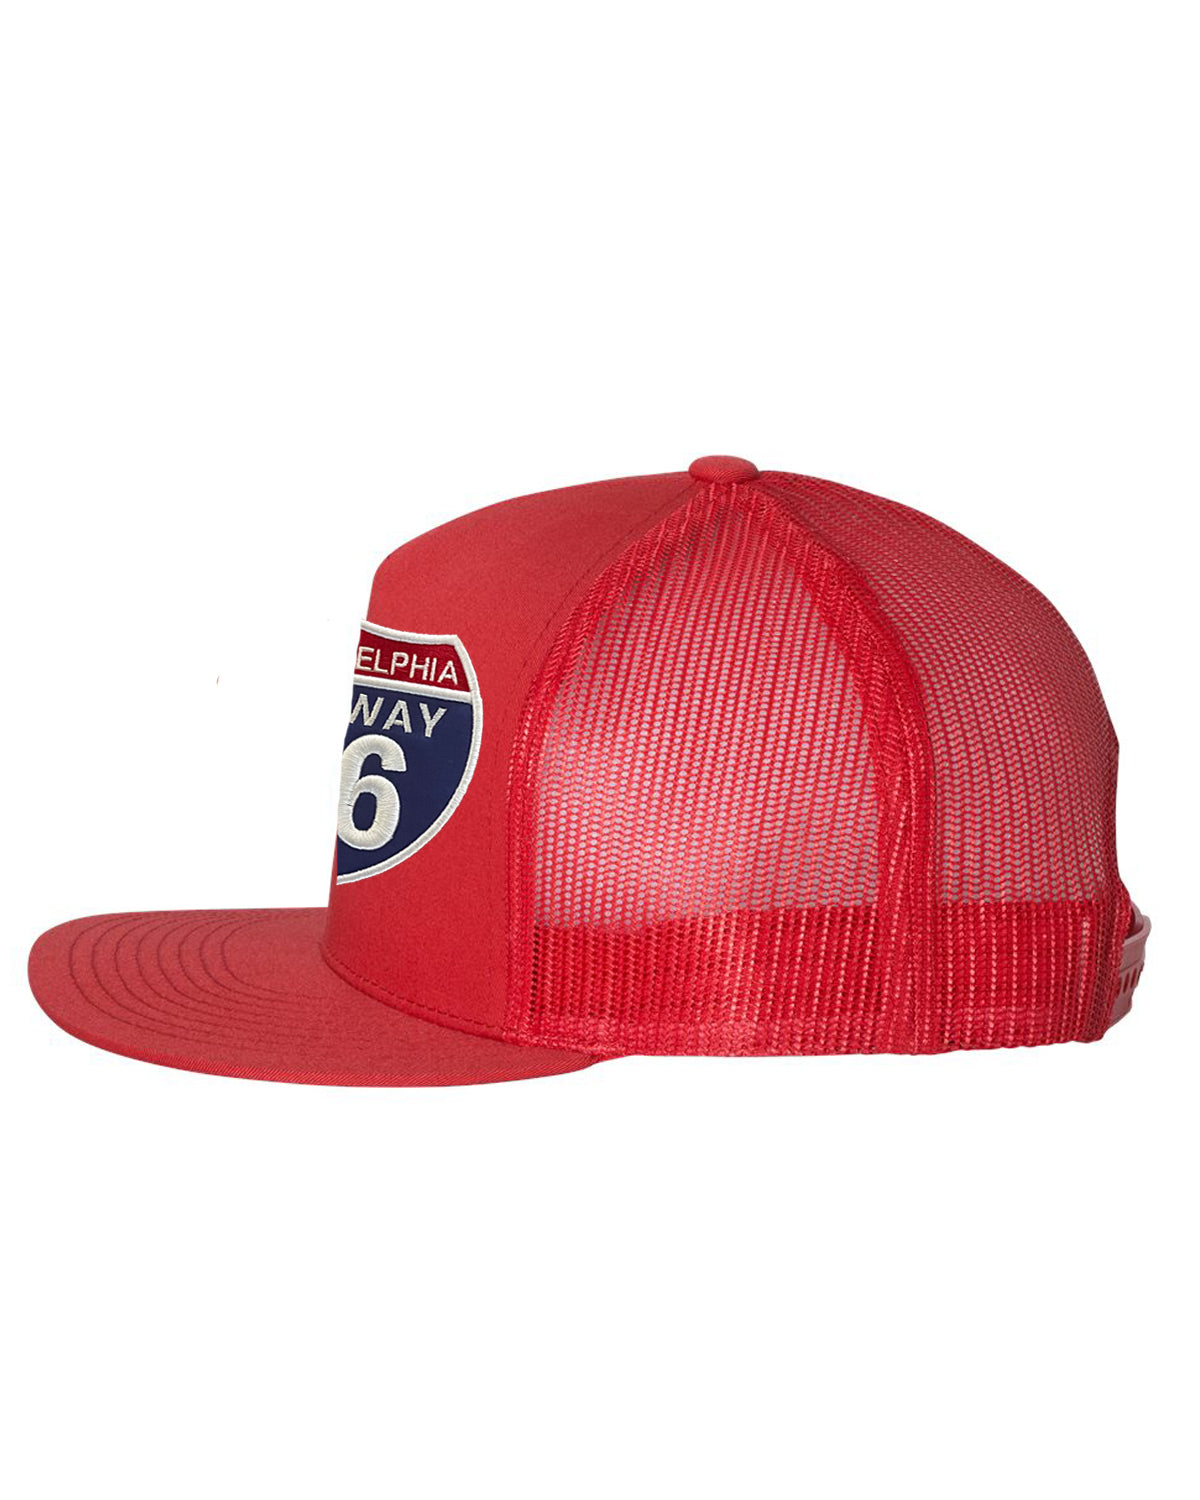 Philadelphia Freeway 20 Year Edition Hat #76